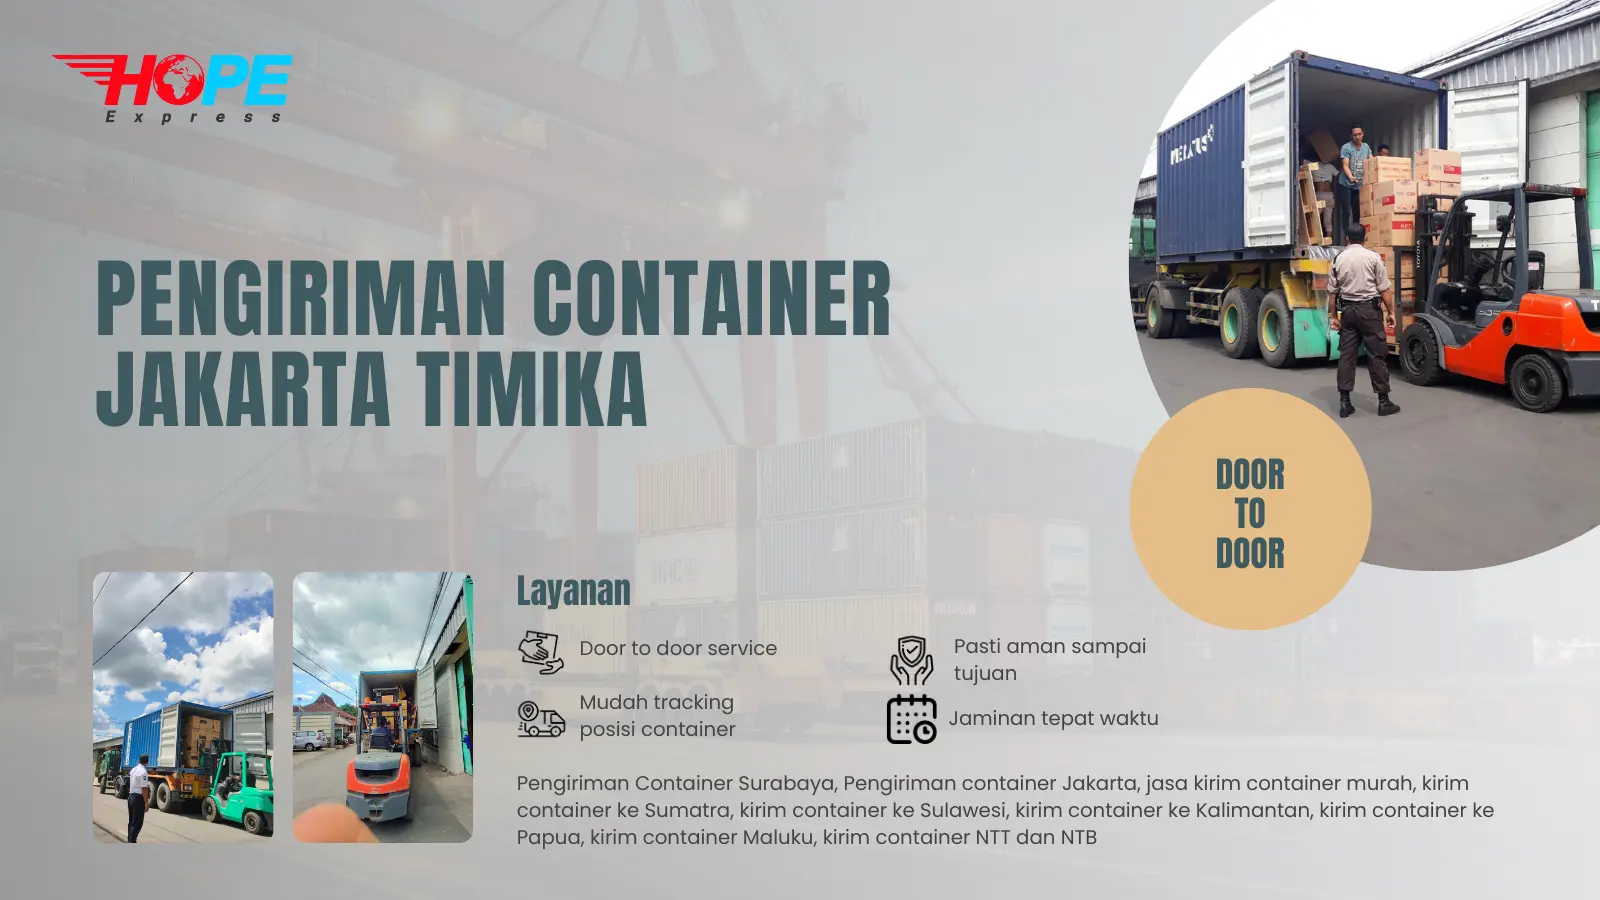 Pengiriman Container Jakarta Timika